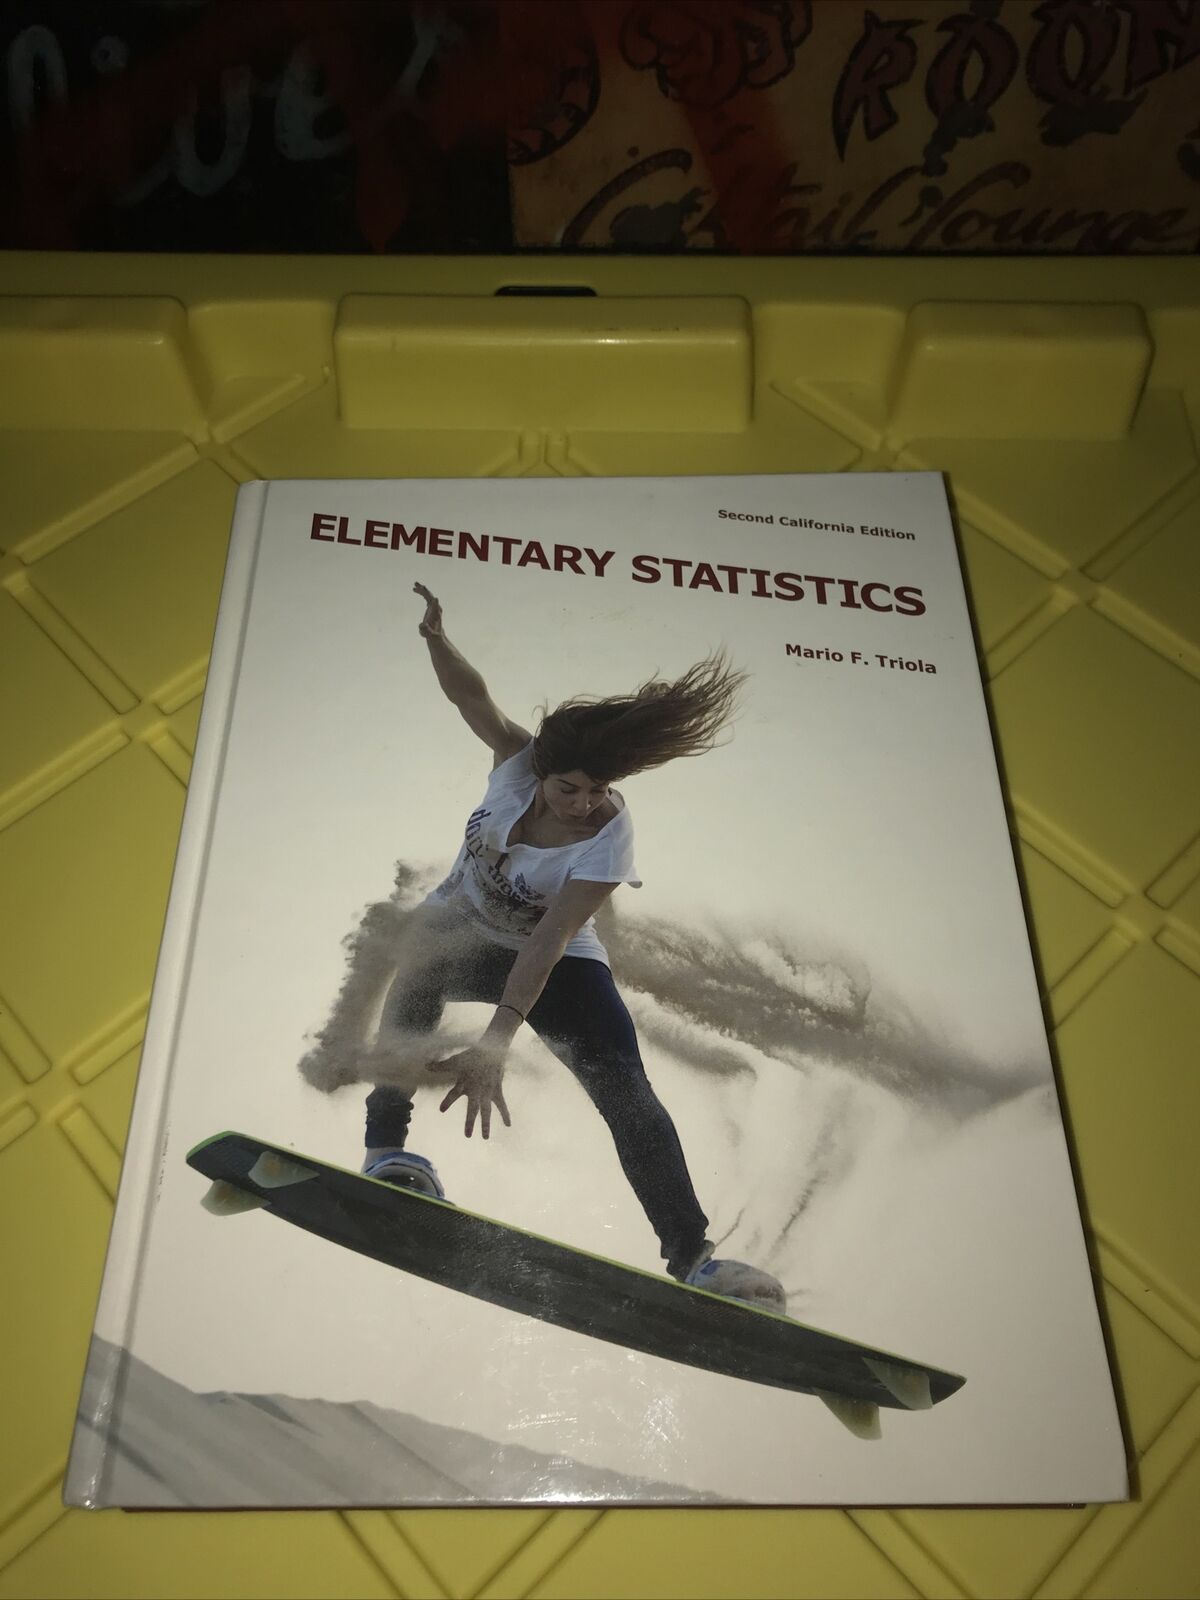 Elementary statistics 2nd California Edition